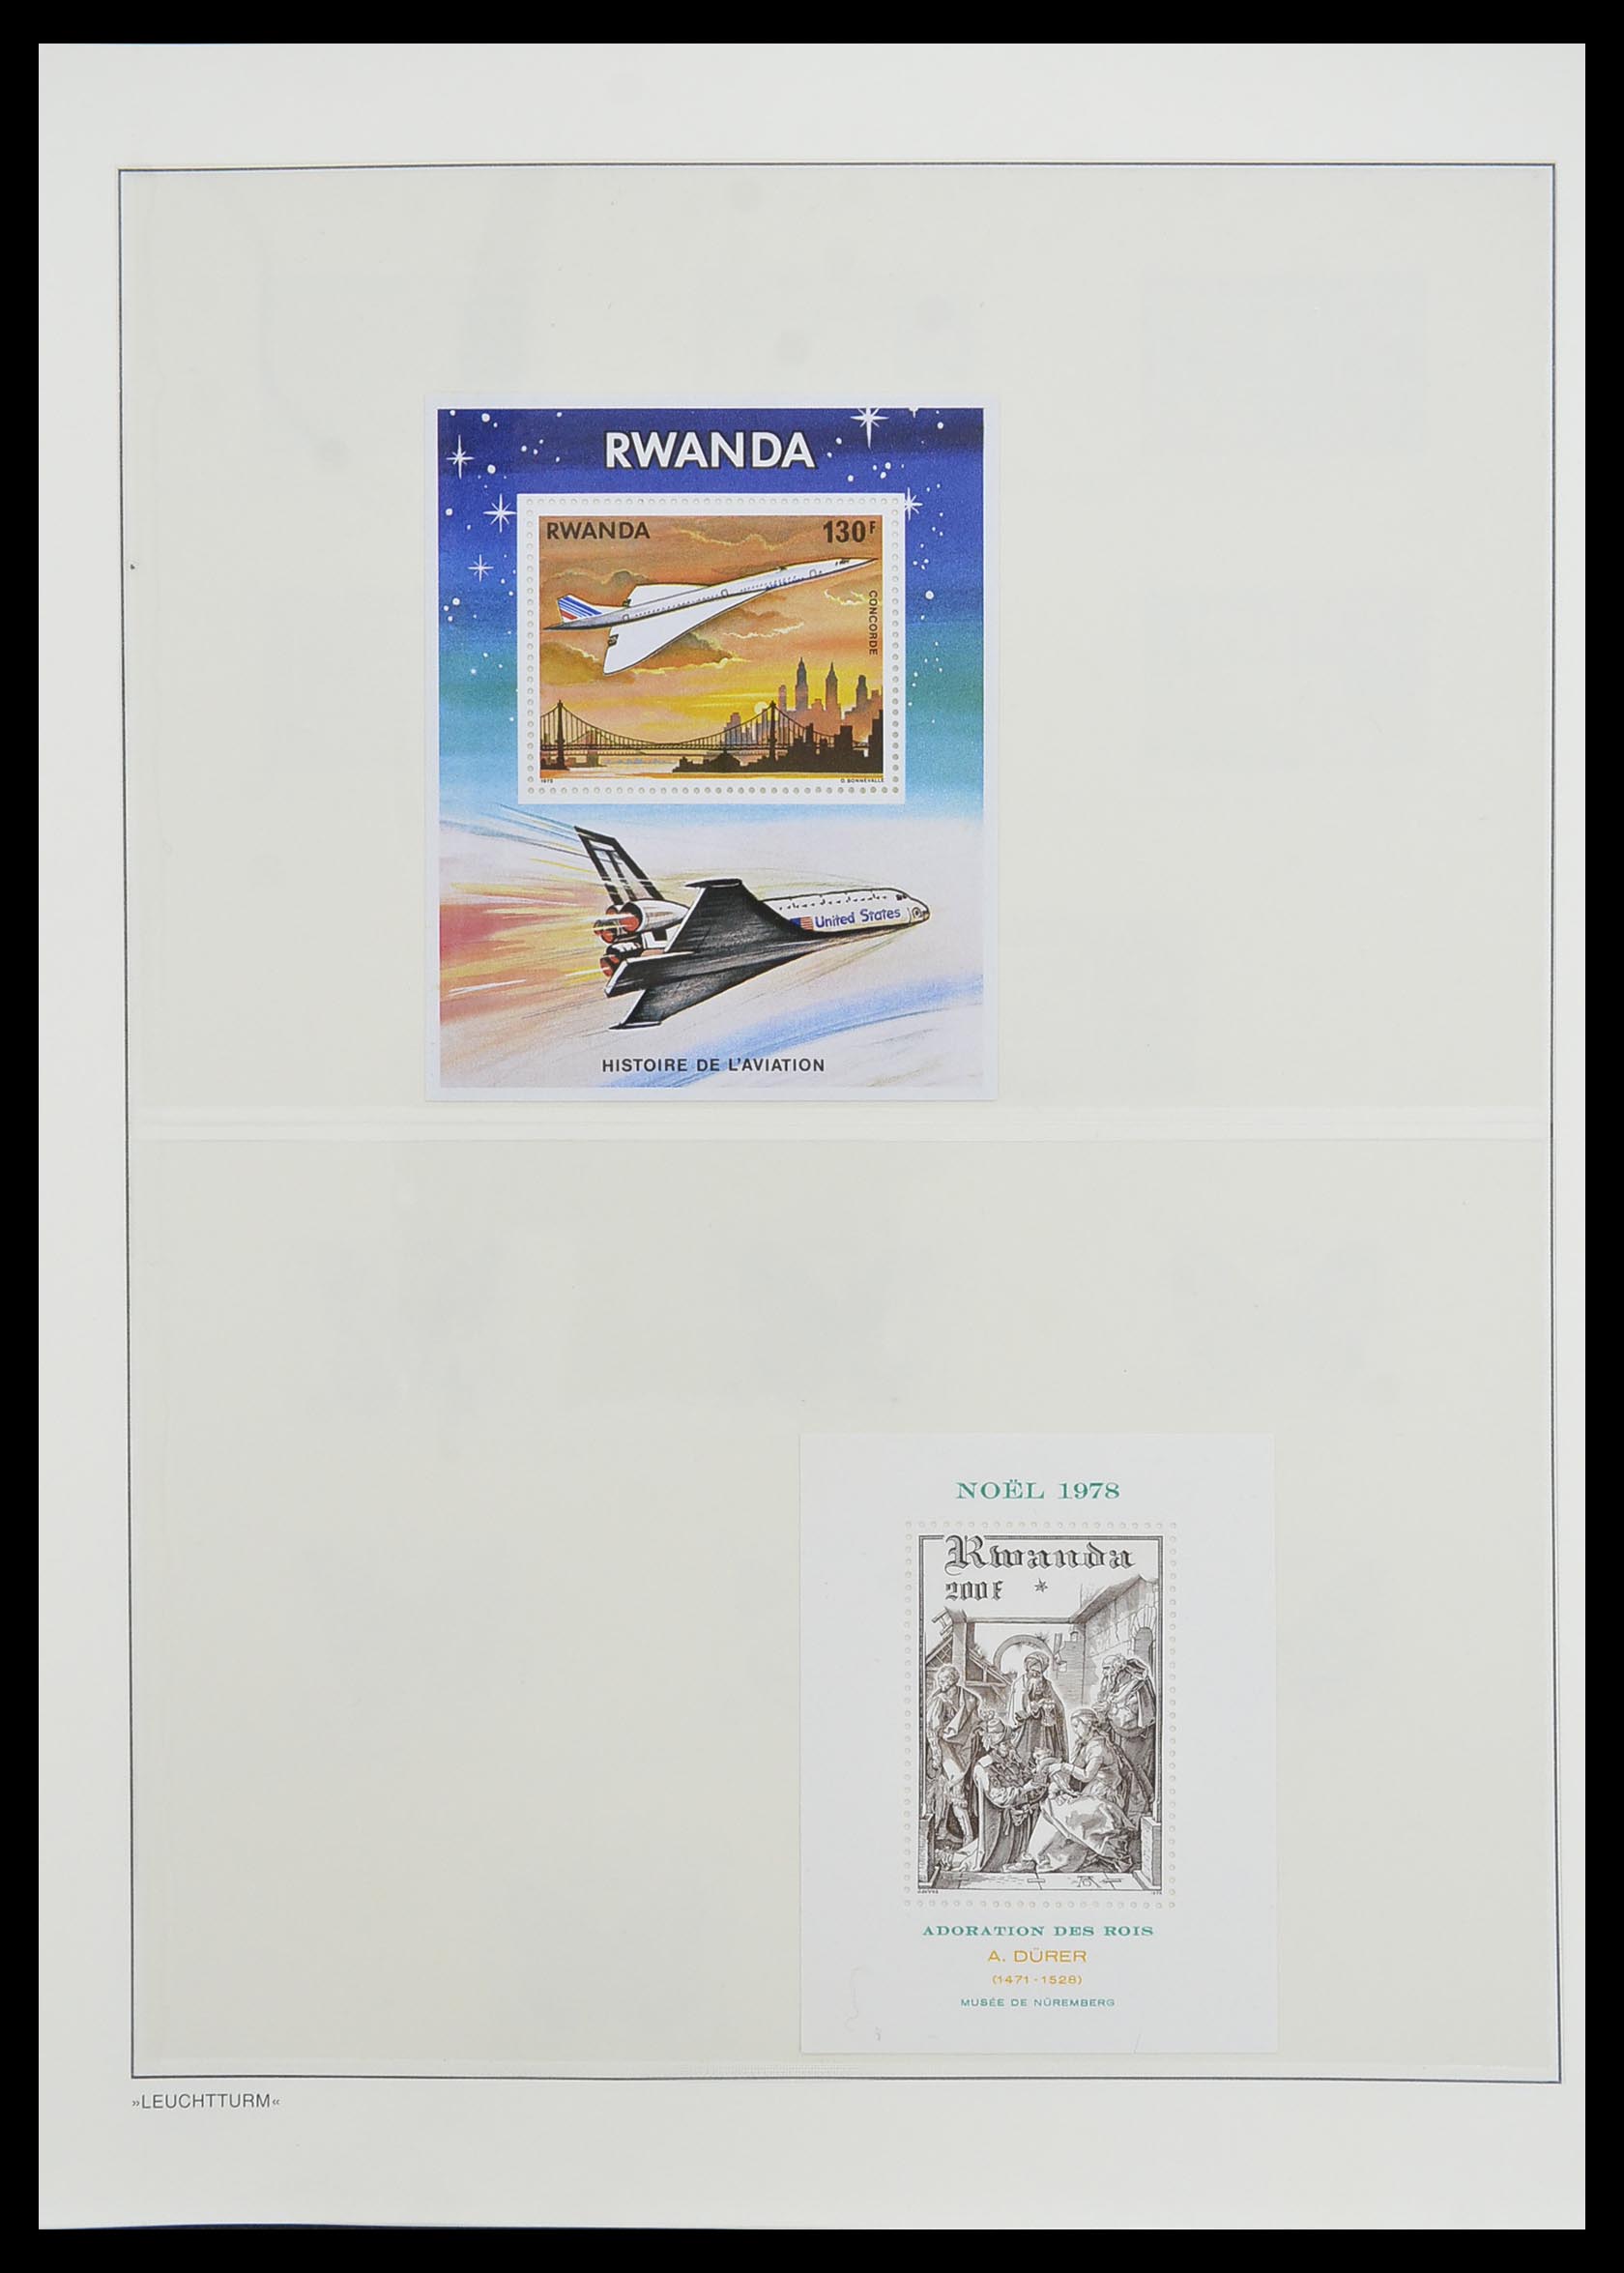 33766 100 - Stamp collection 33766 Rwanda 1962-1999.